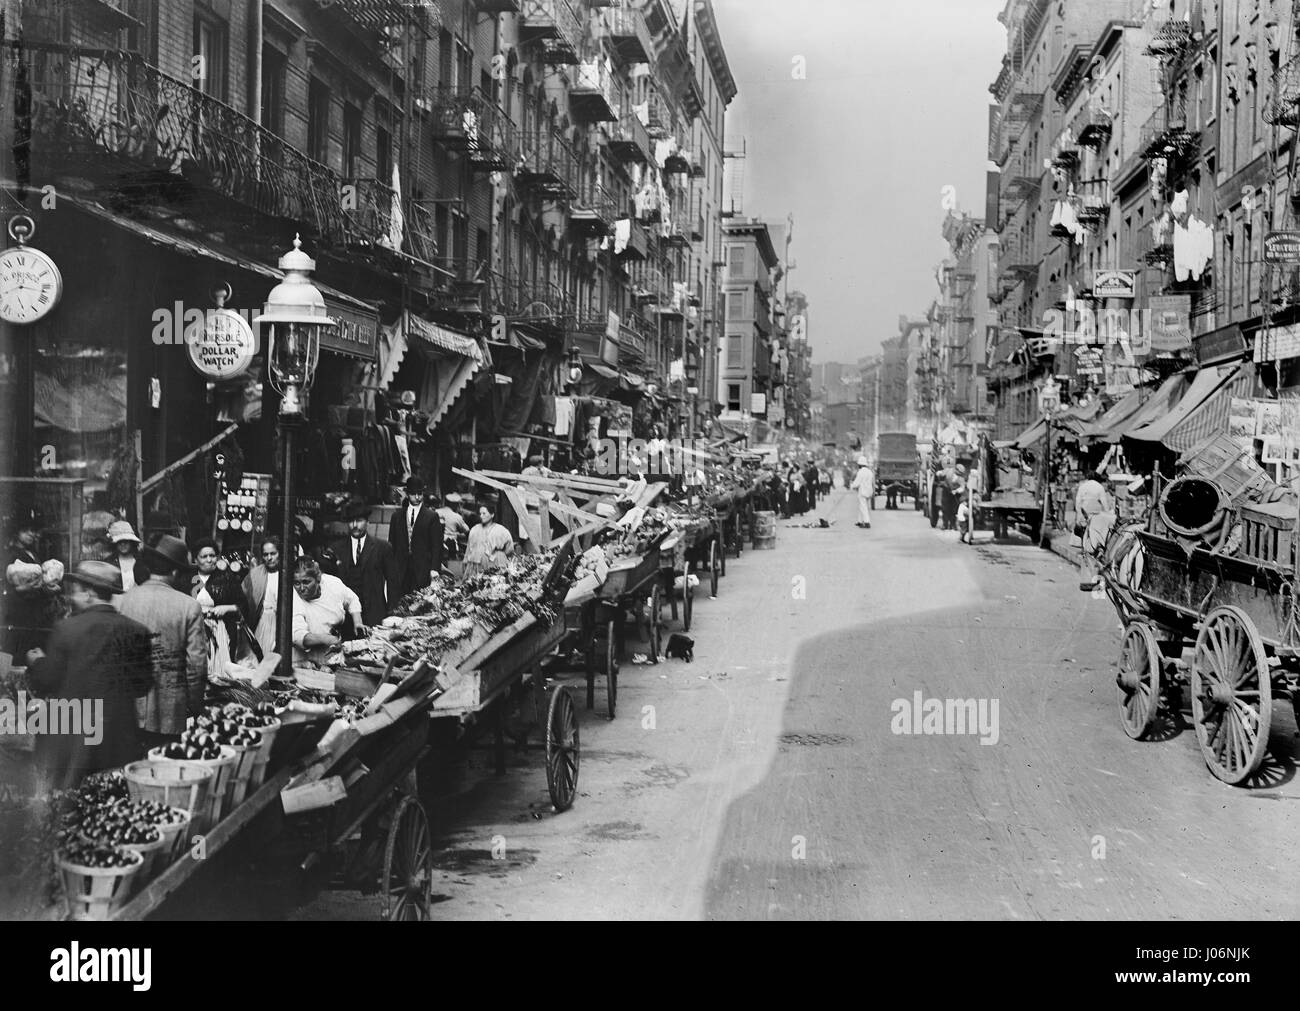 Italian Neighborhood with Street Market, Mulberry Street, New York City, New York, USA, Detroit Publishing Company, 1900 Stock Photo